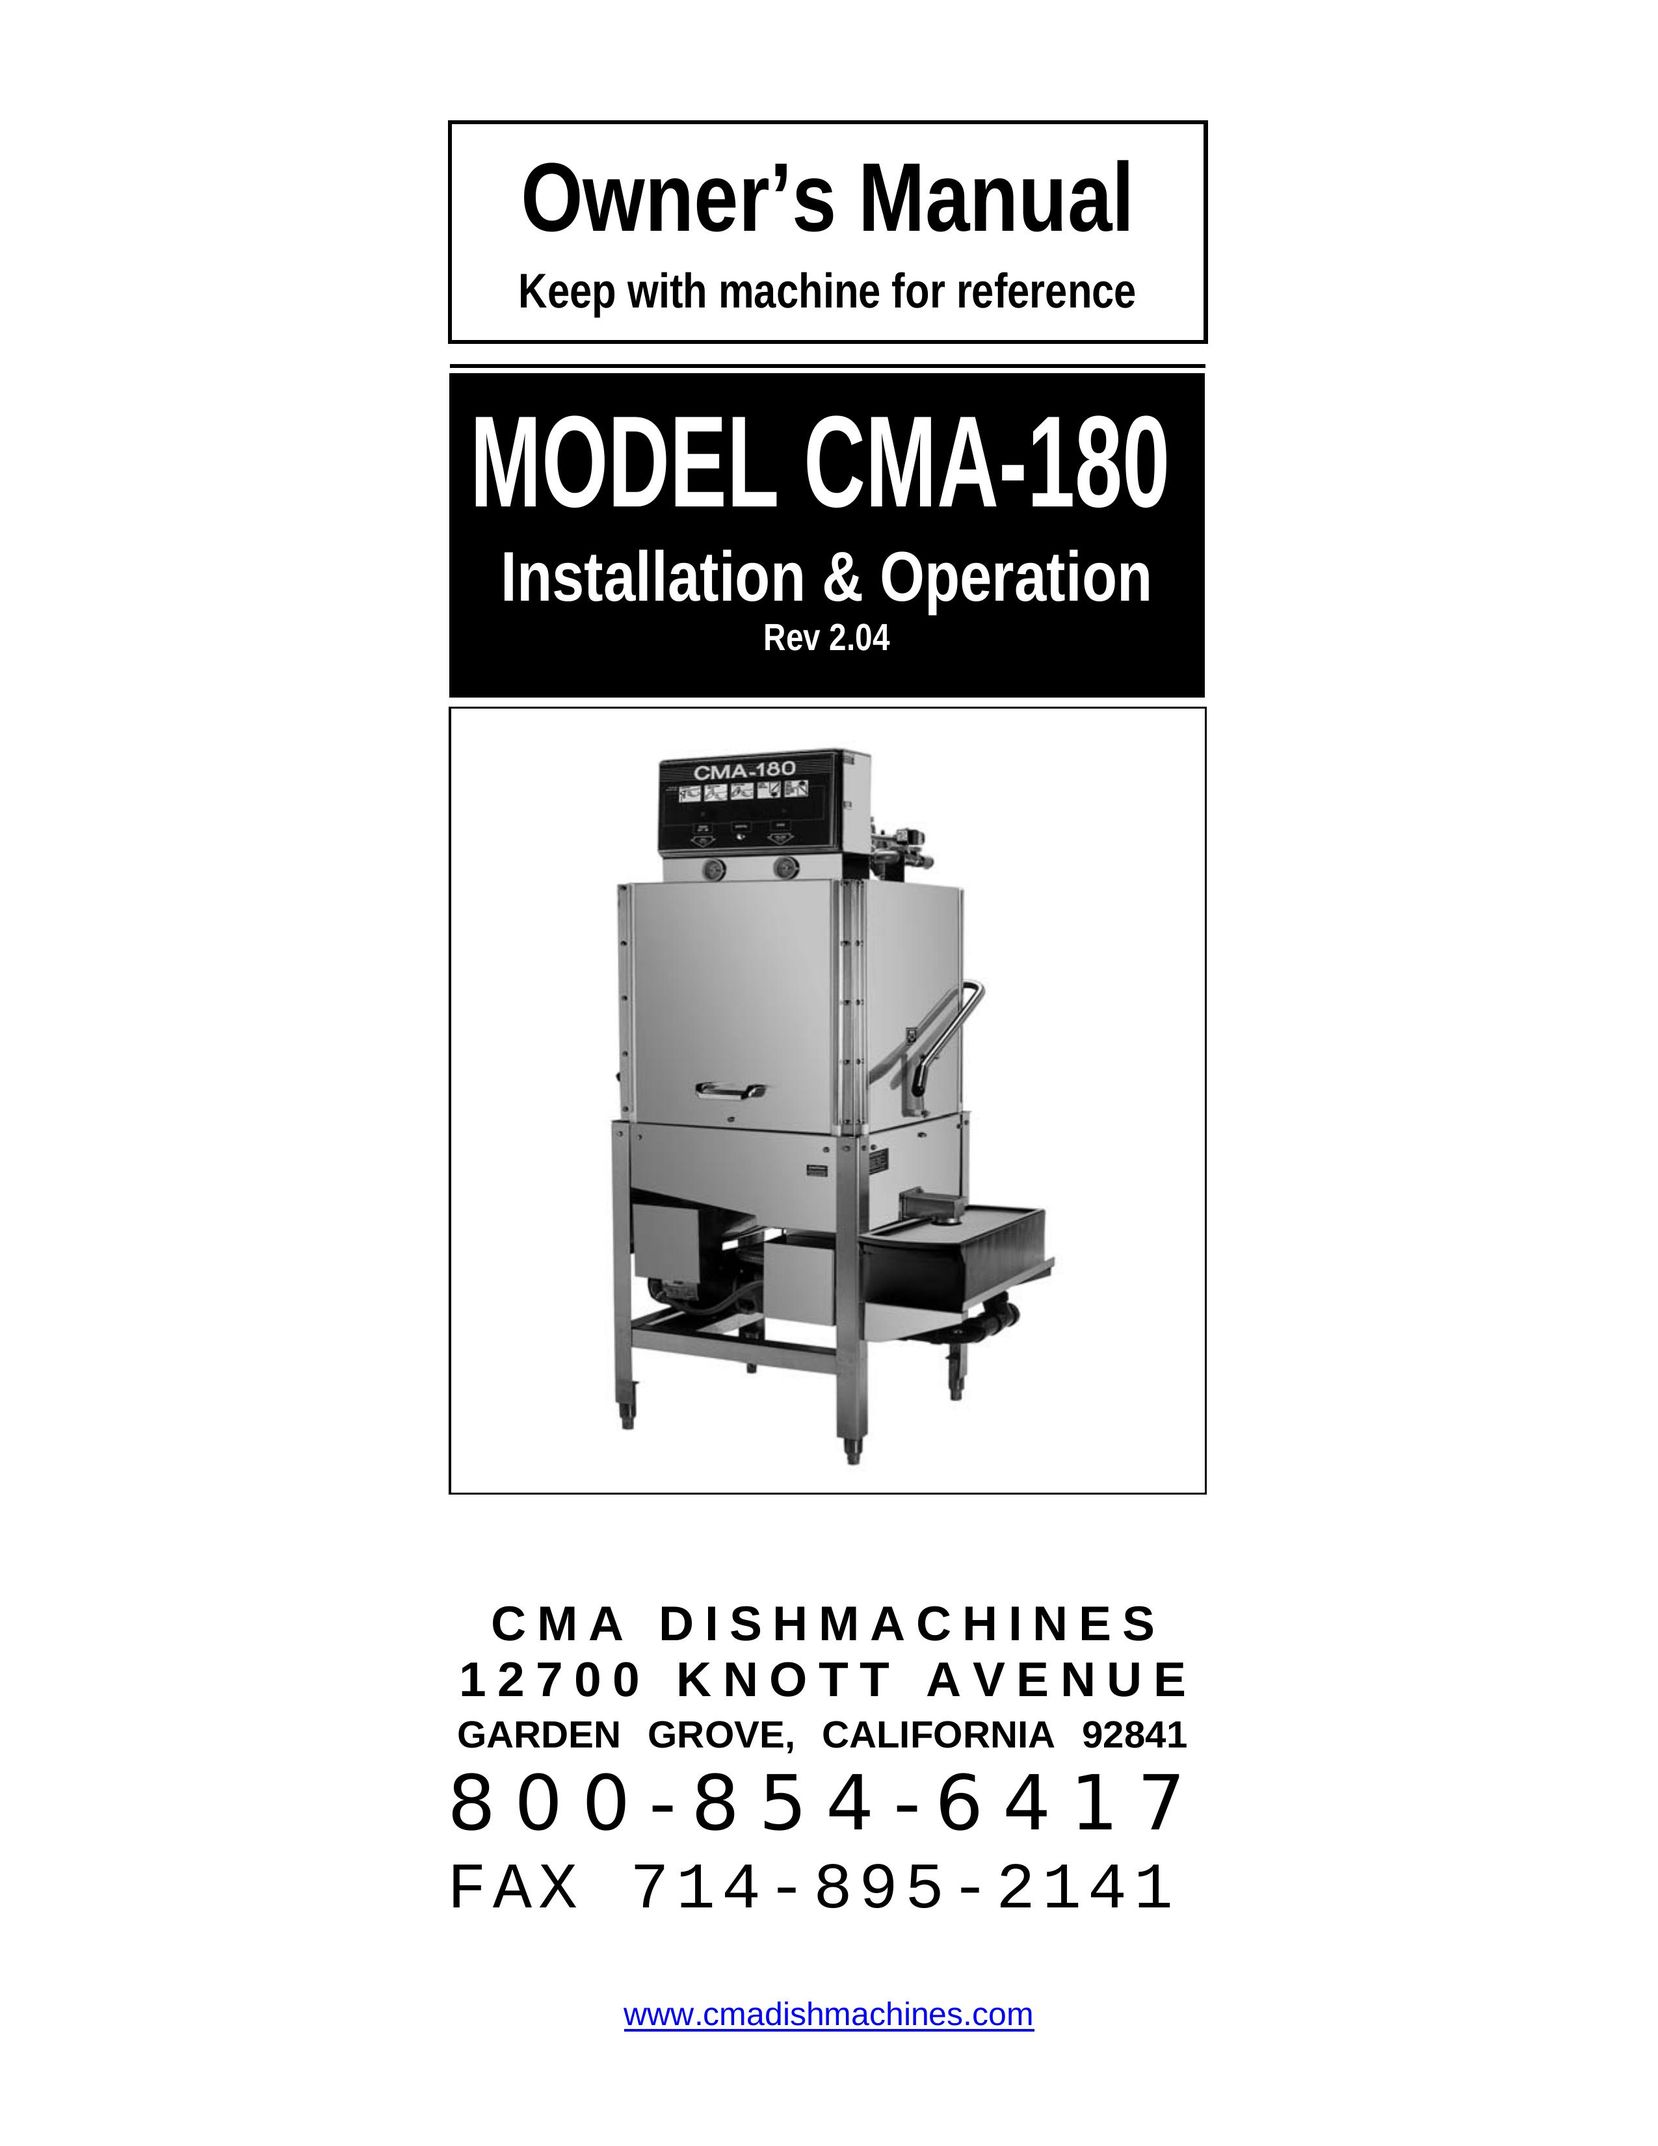 CMA Dishmachines CMA-180 Dishwasher User Manual